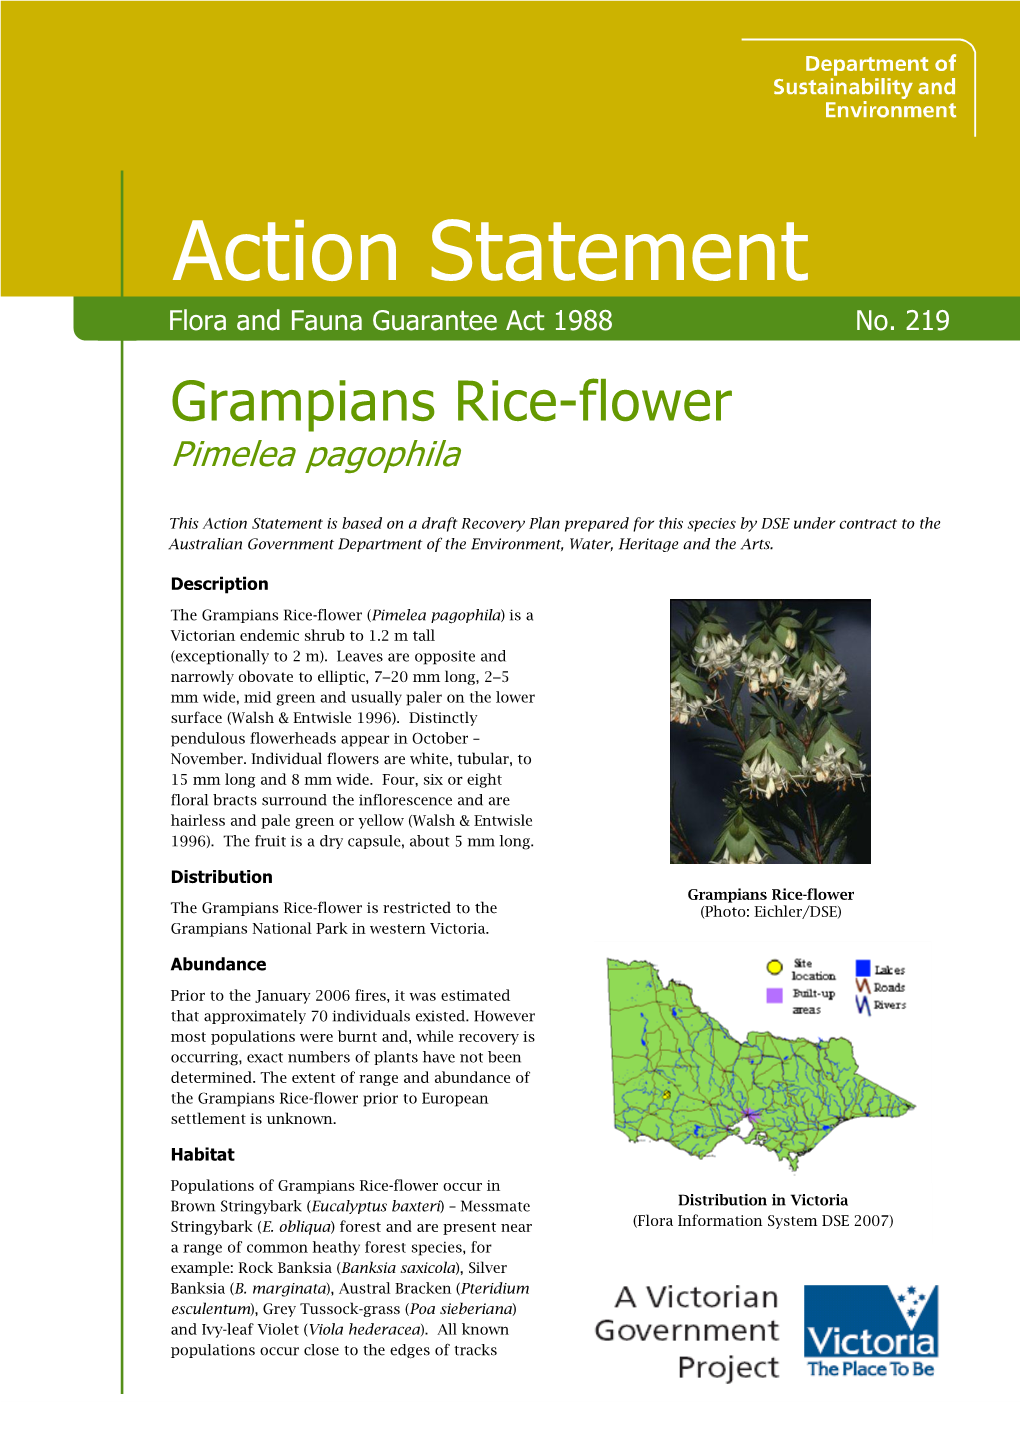 Grampians Rice-Flower (Pimelea Pagophila)